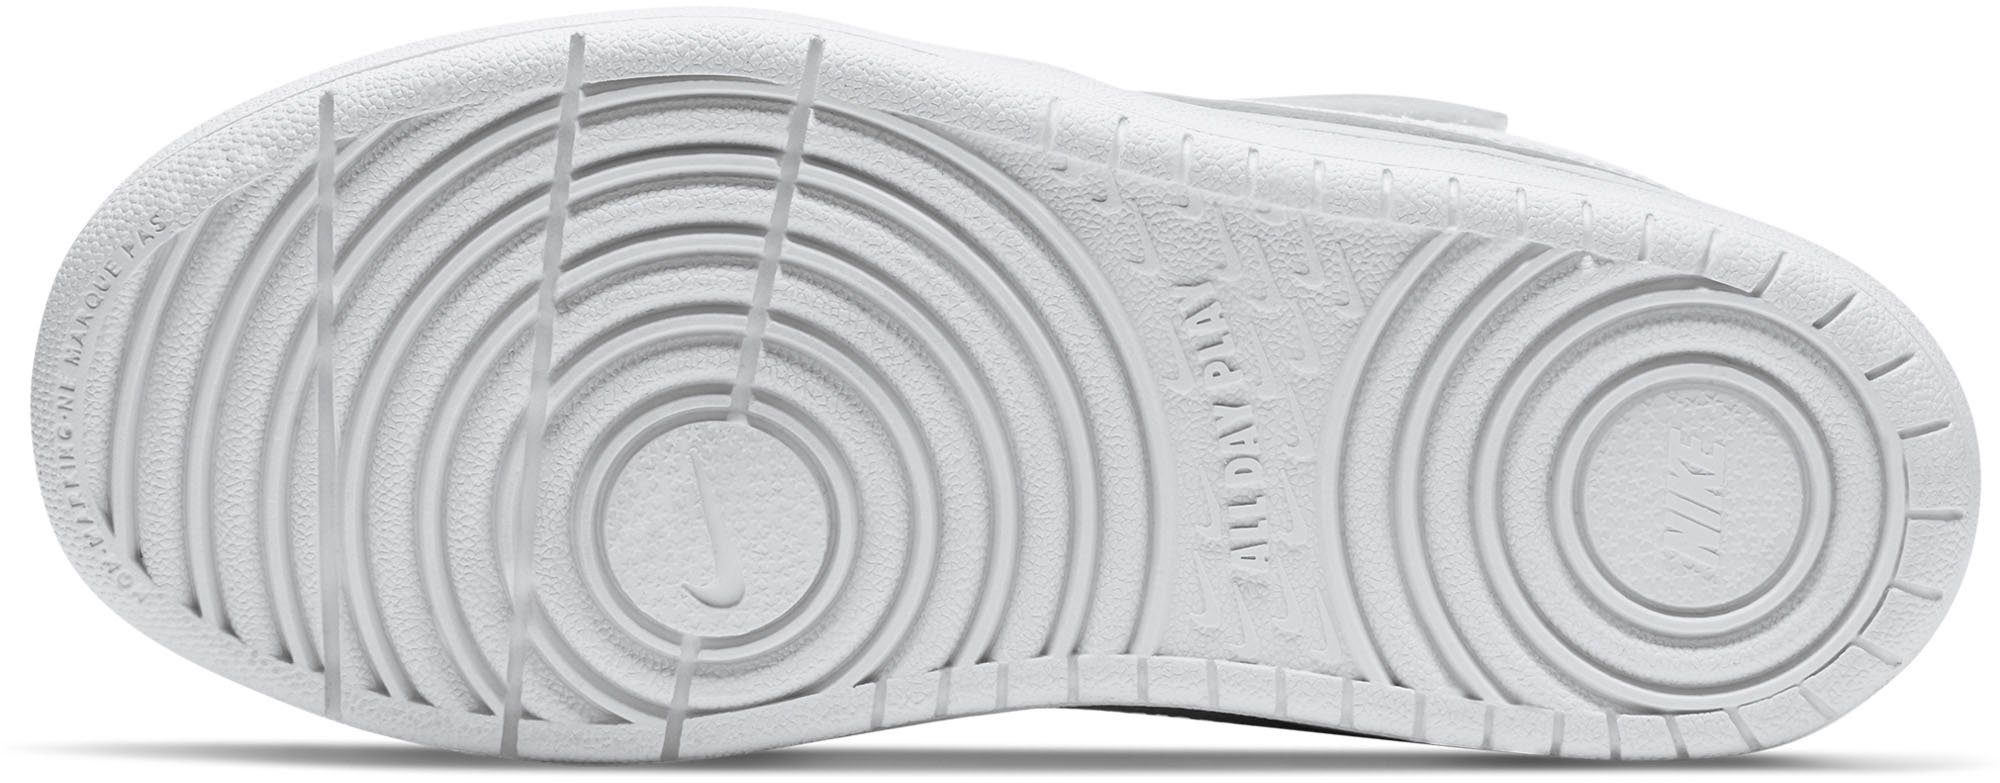 Nike Sportswear COURT BOROUGH LOW Force Air 1 den Design Sneaker 2 Spuren des auf